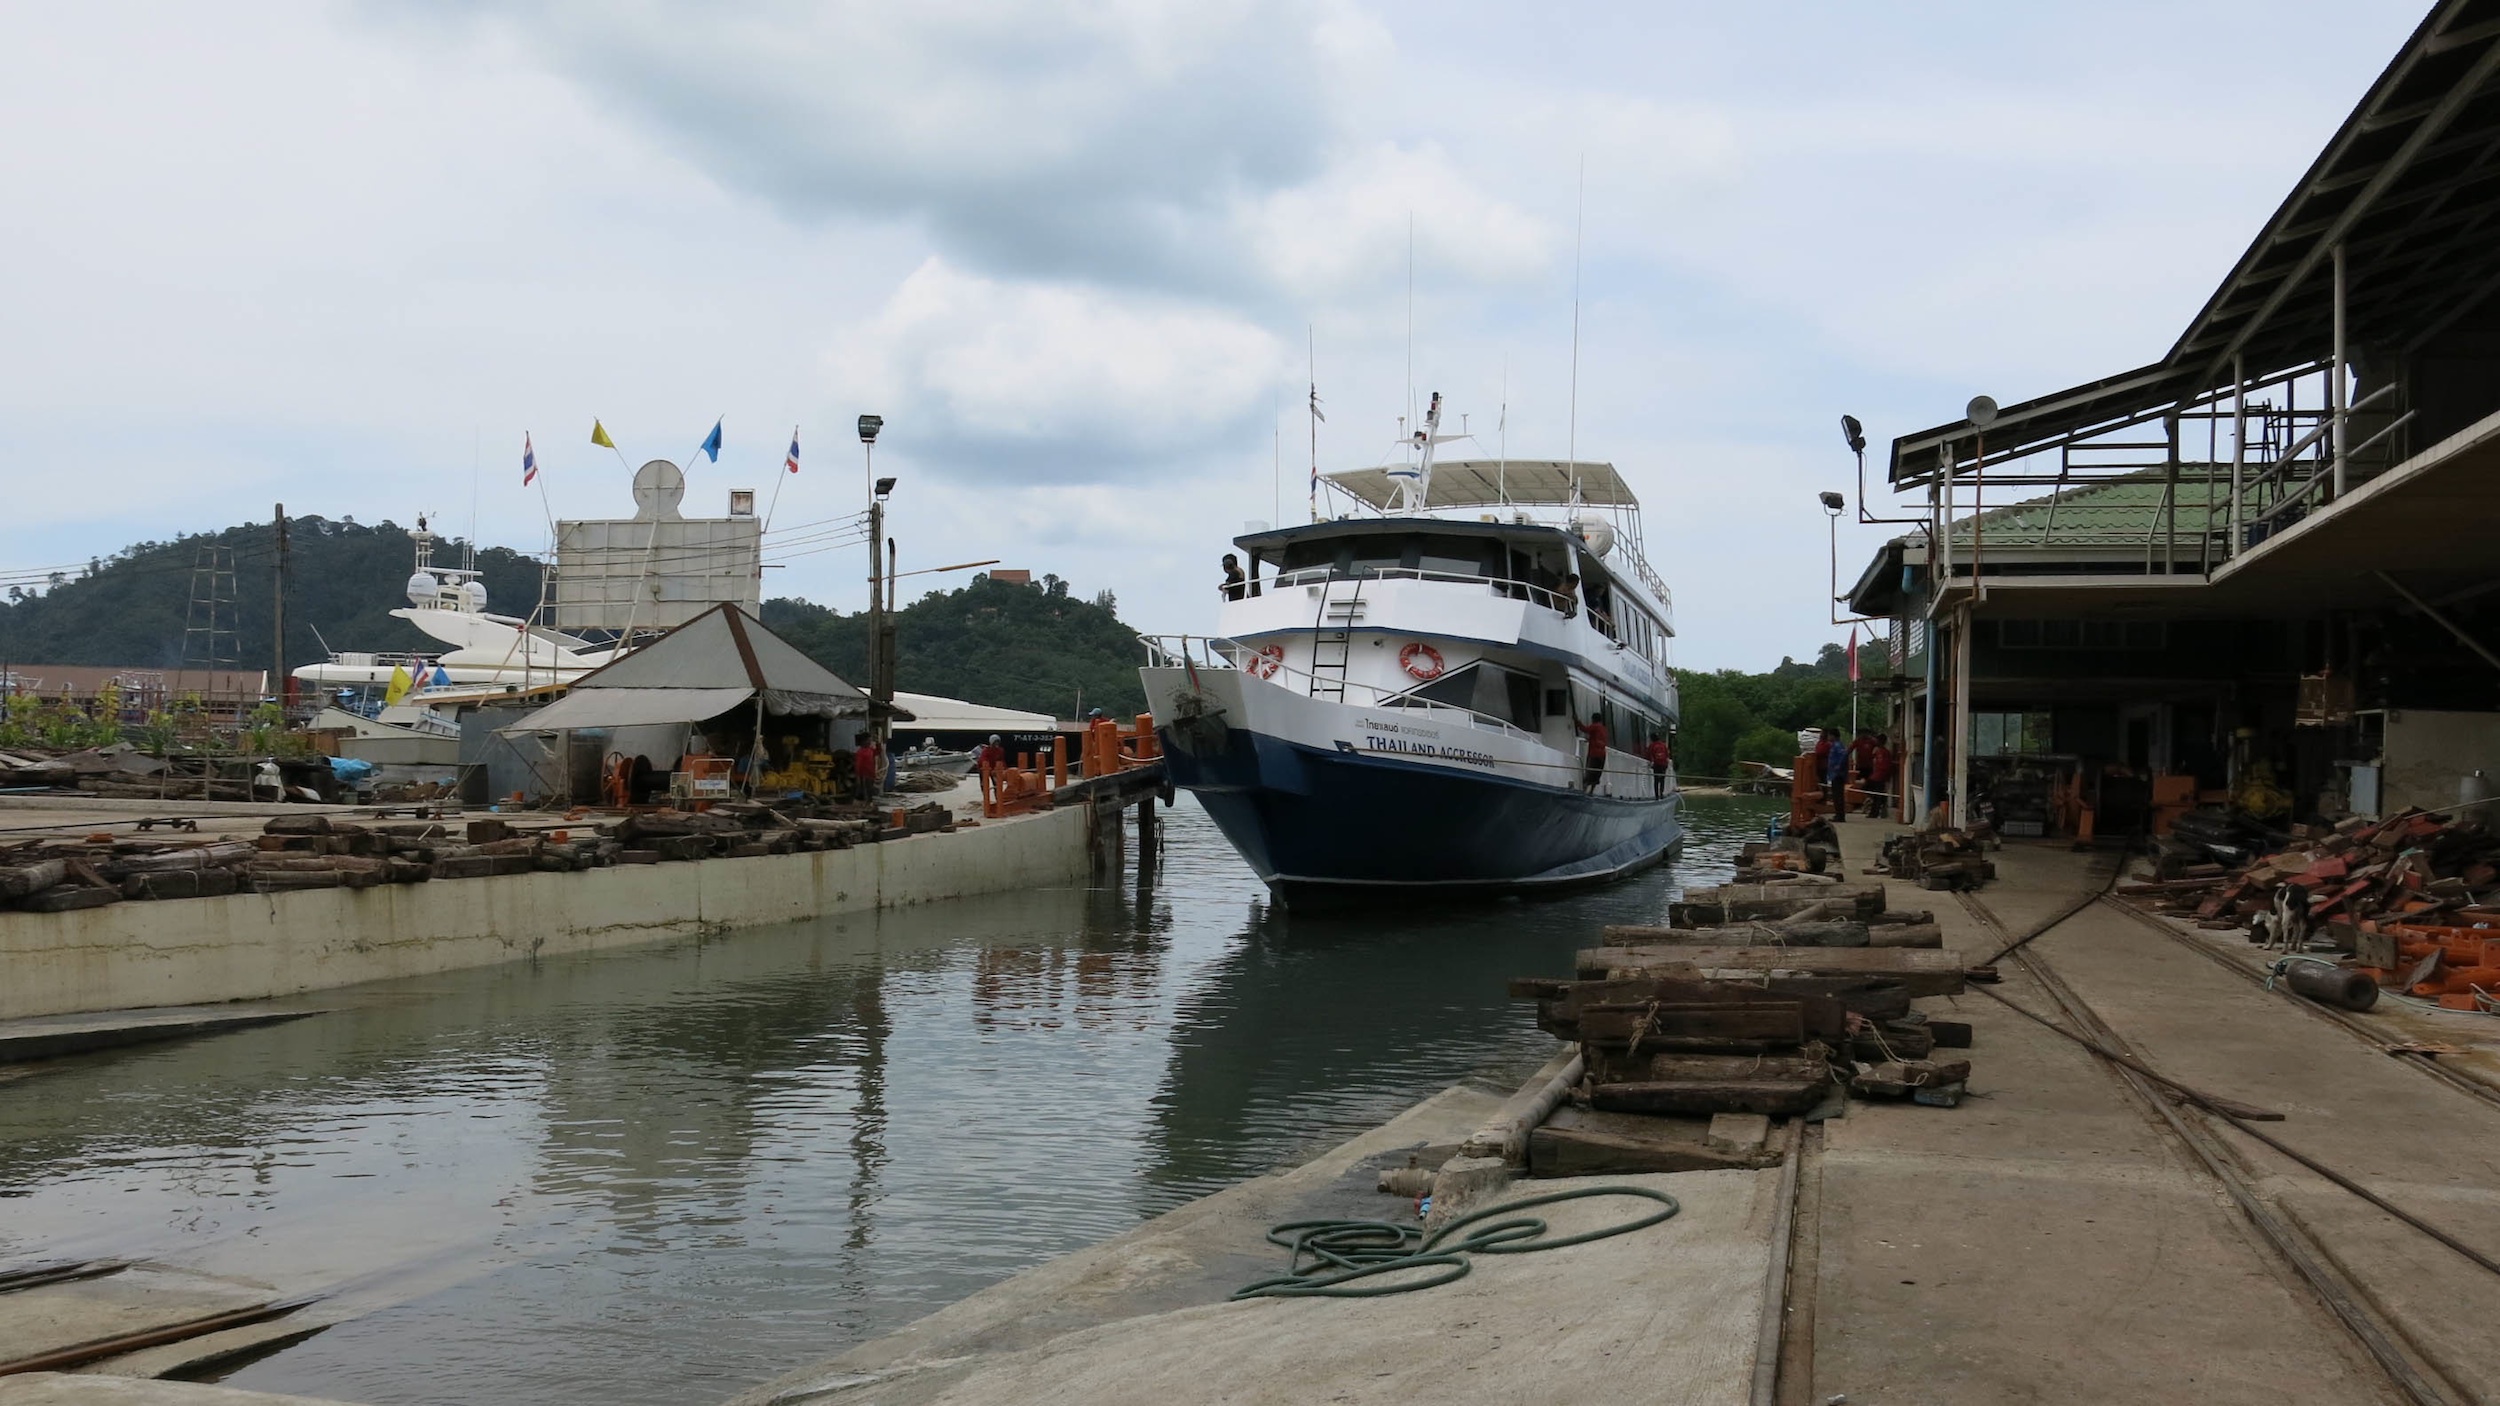 July 29, 2013 Dry Dock Photos